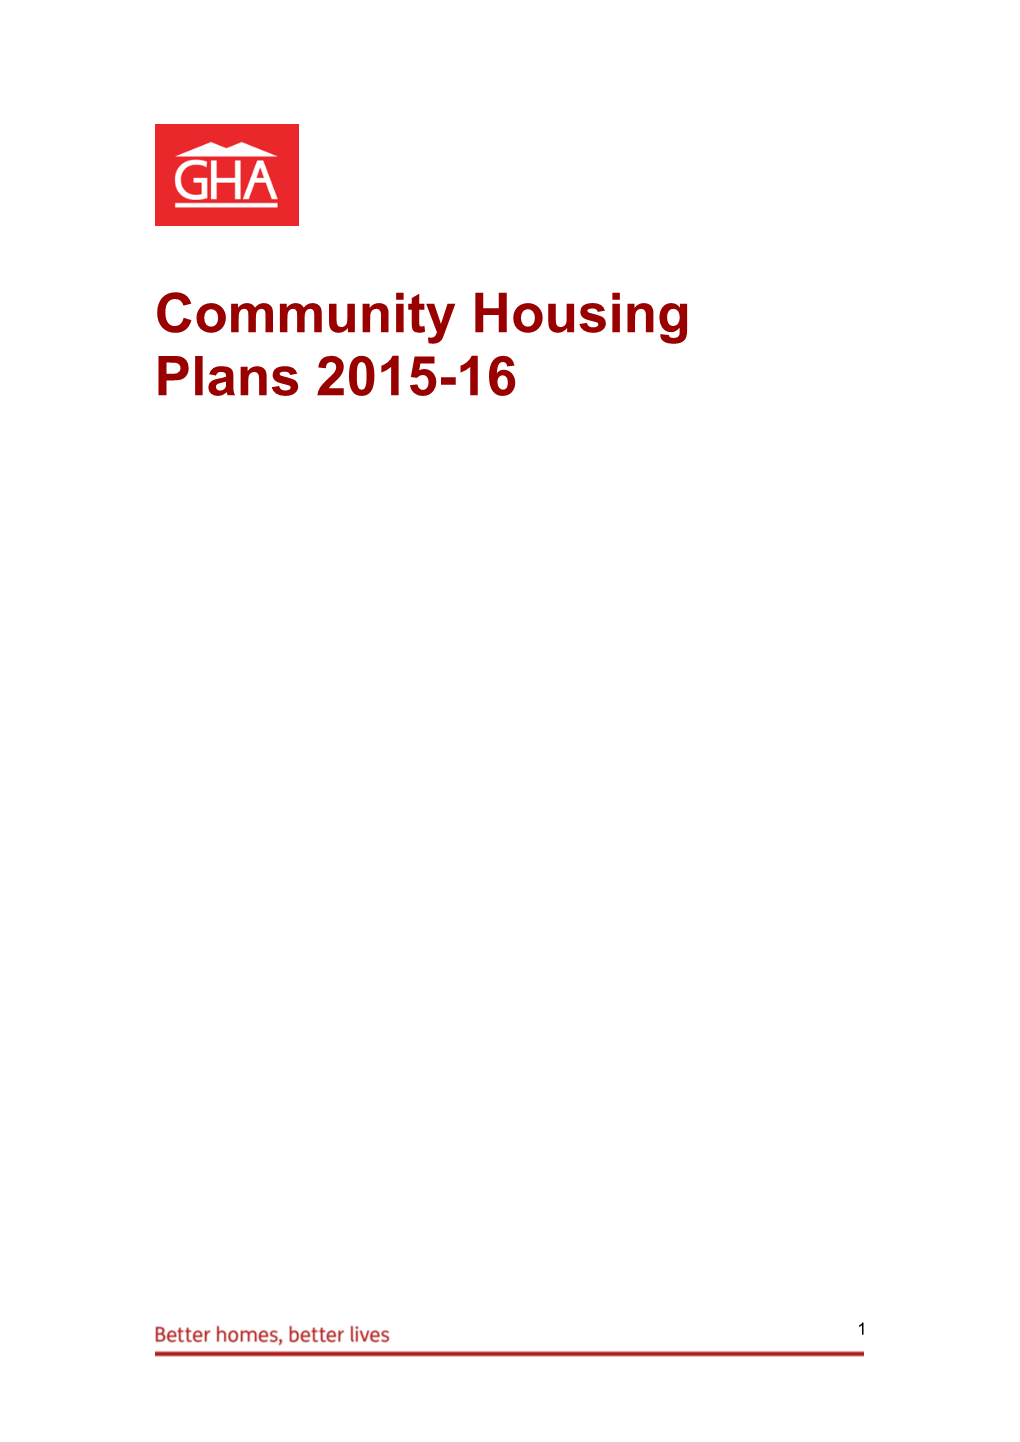 Community Housing Plans 2015-16